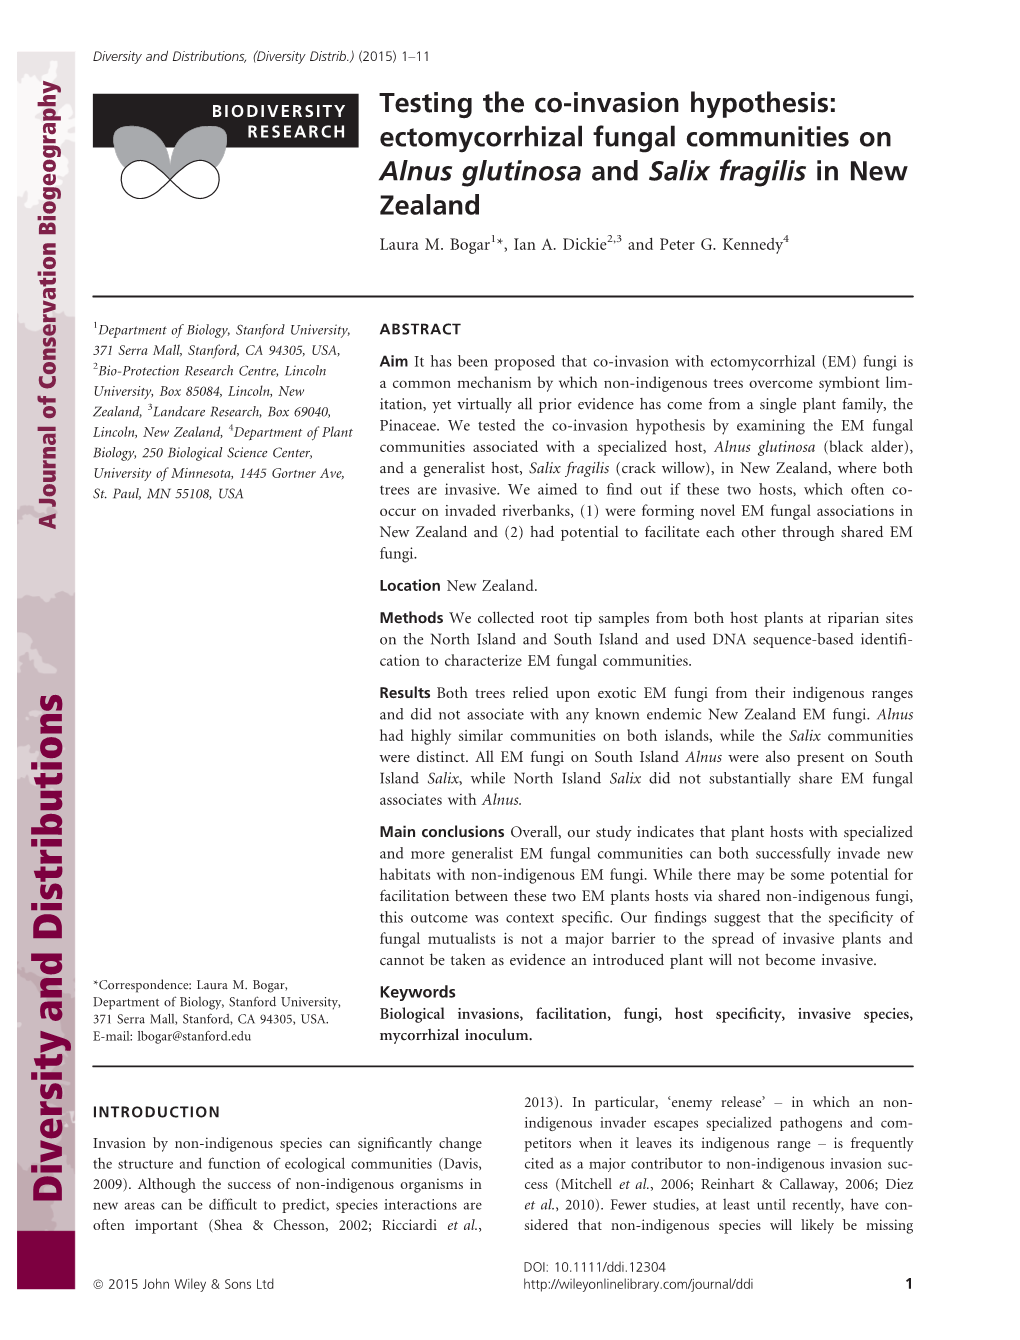 Ectomycorrhizal Fungal Communities on Alnus Glutinosa and Salix Fragilis in New Zealand Laura M